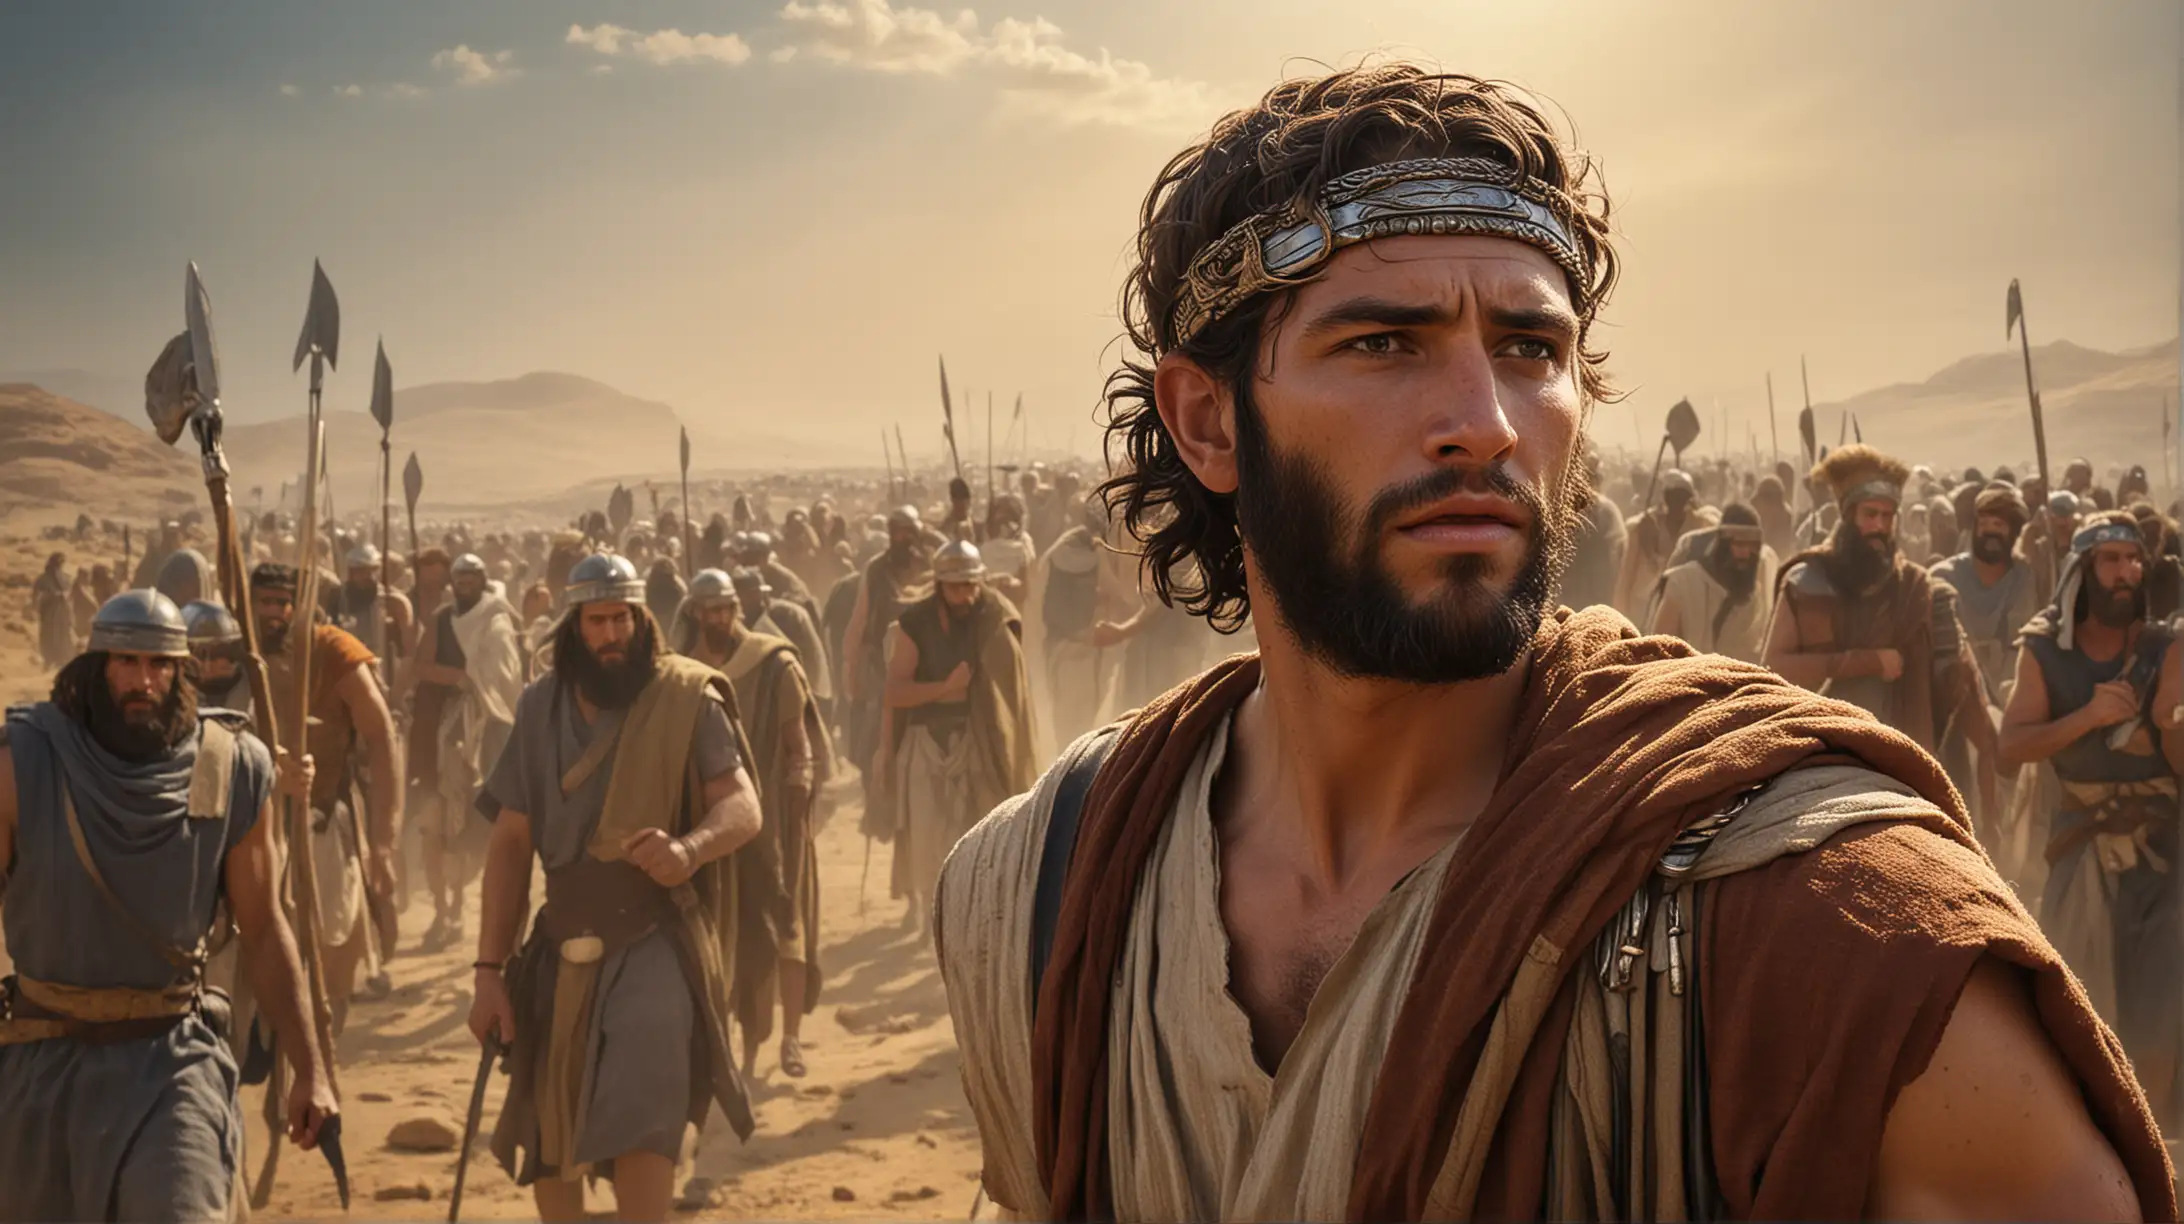 Joshua Leading Israelites to Promised Land in Biblical Era